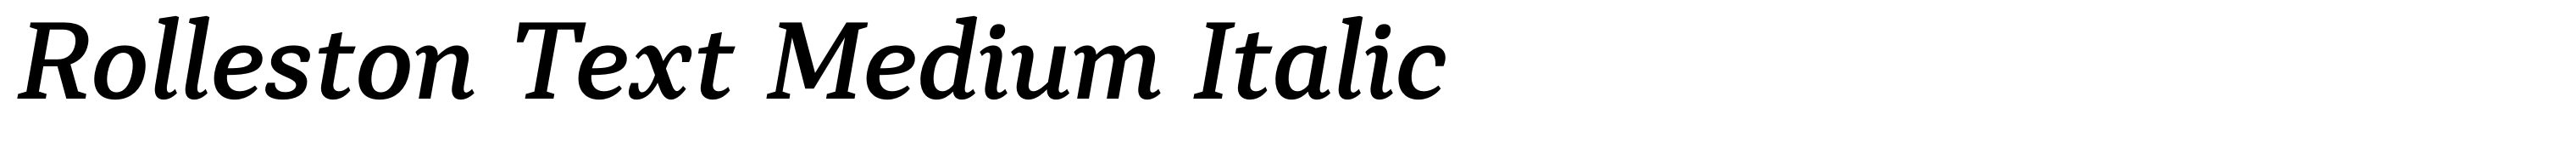 Rolleston Text Medium Italic